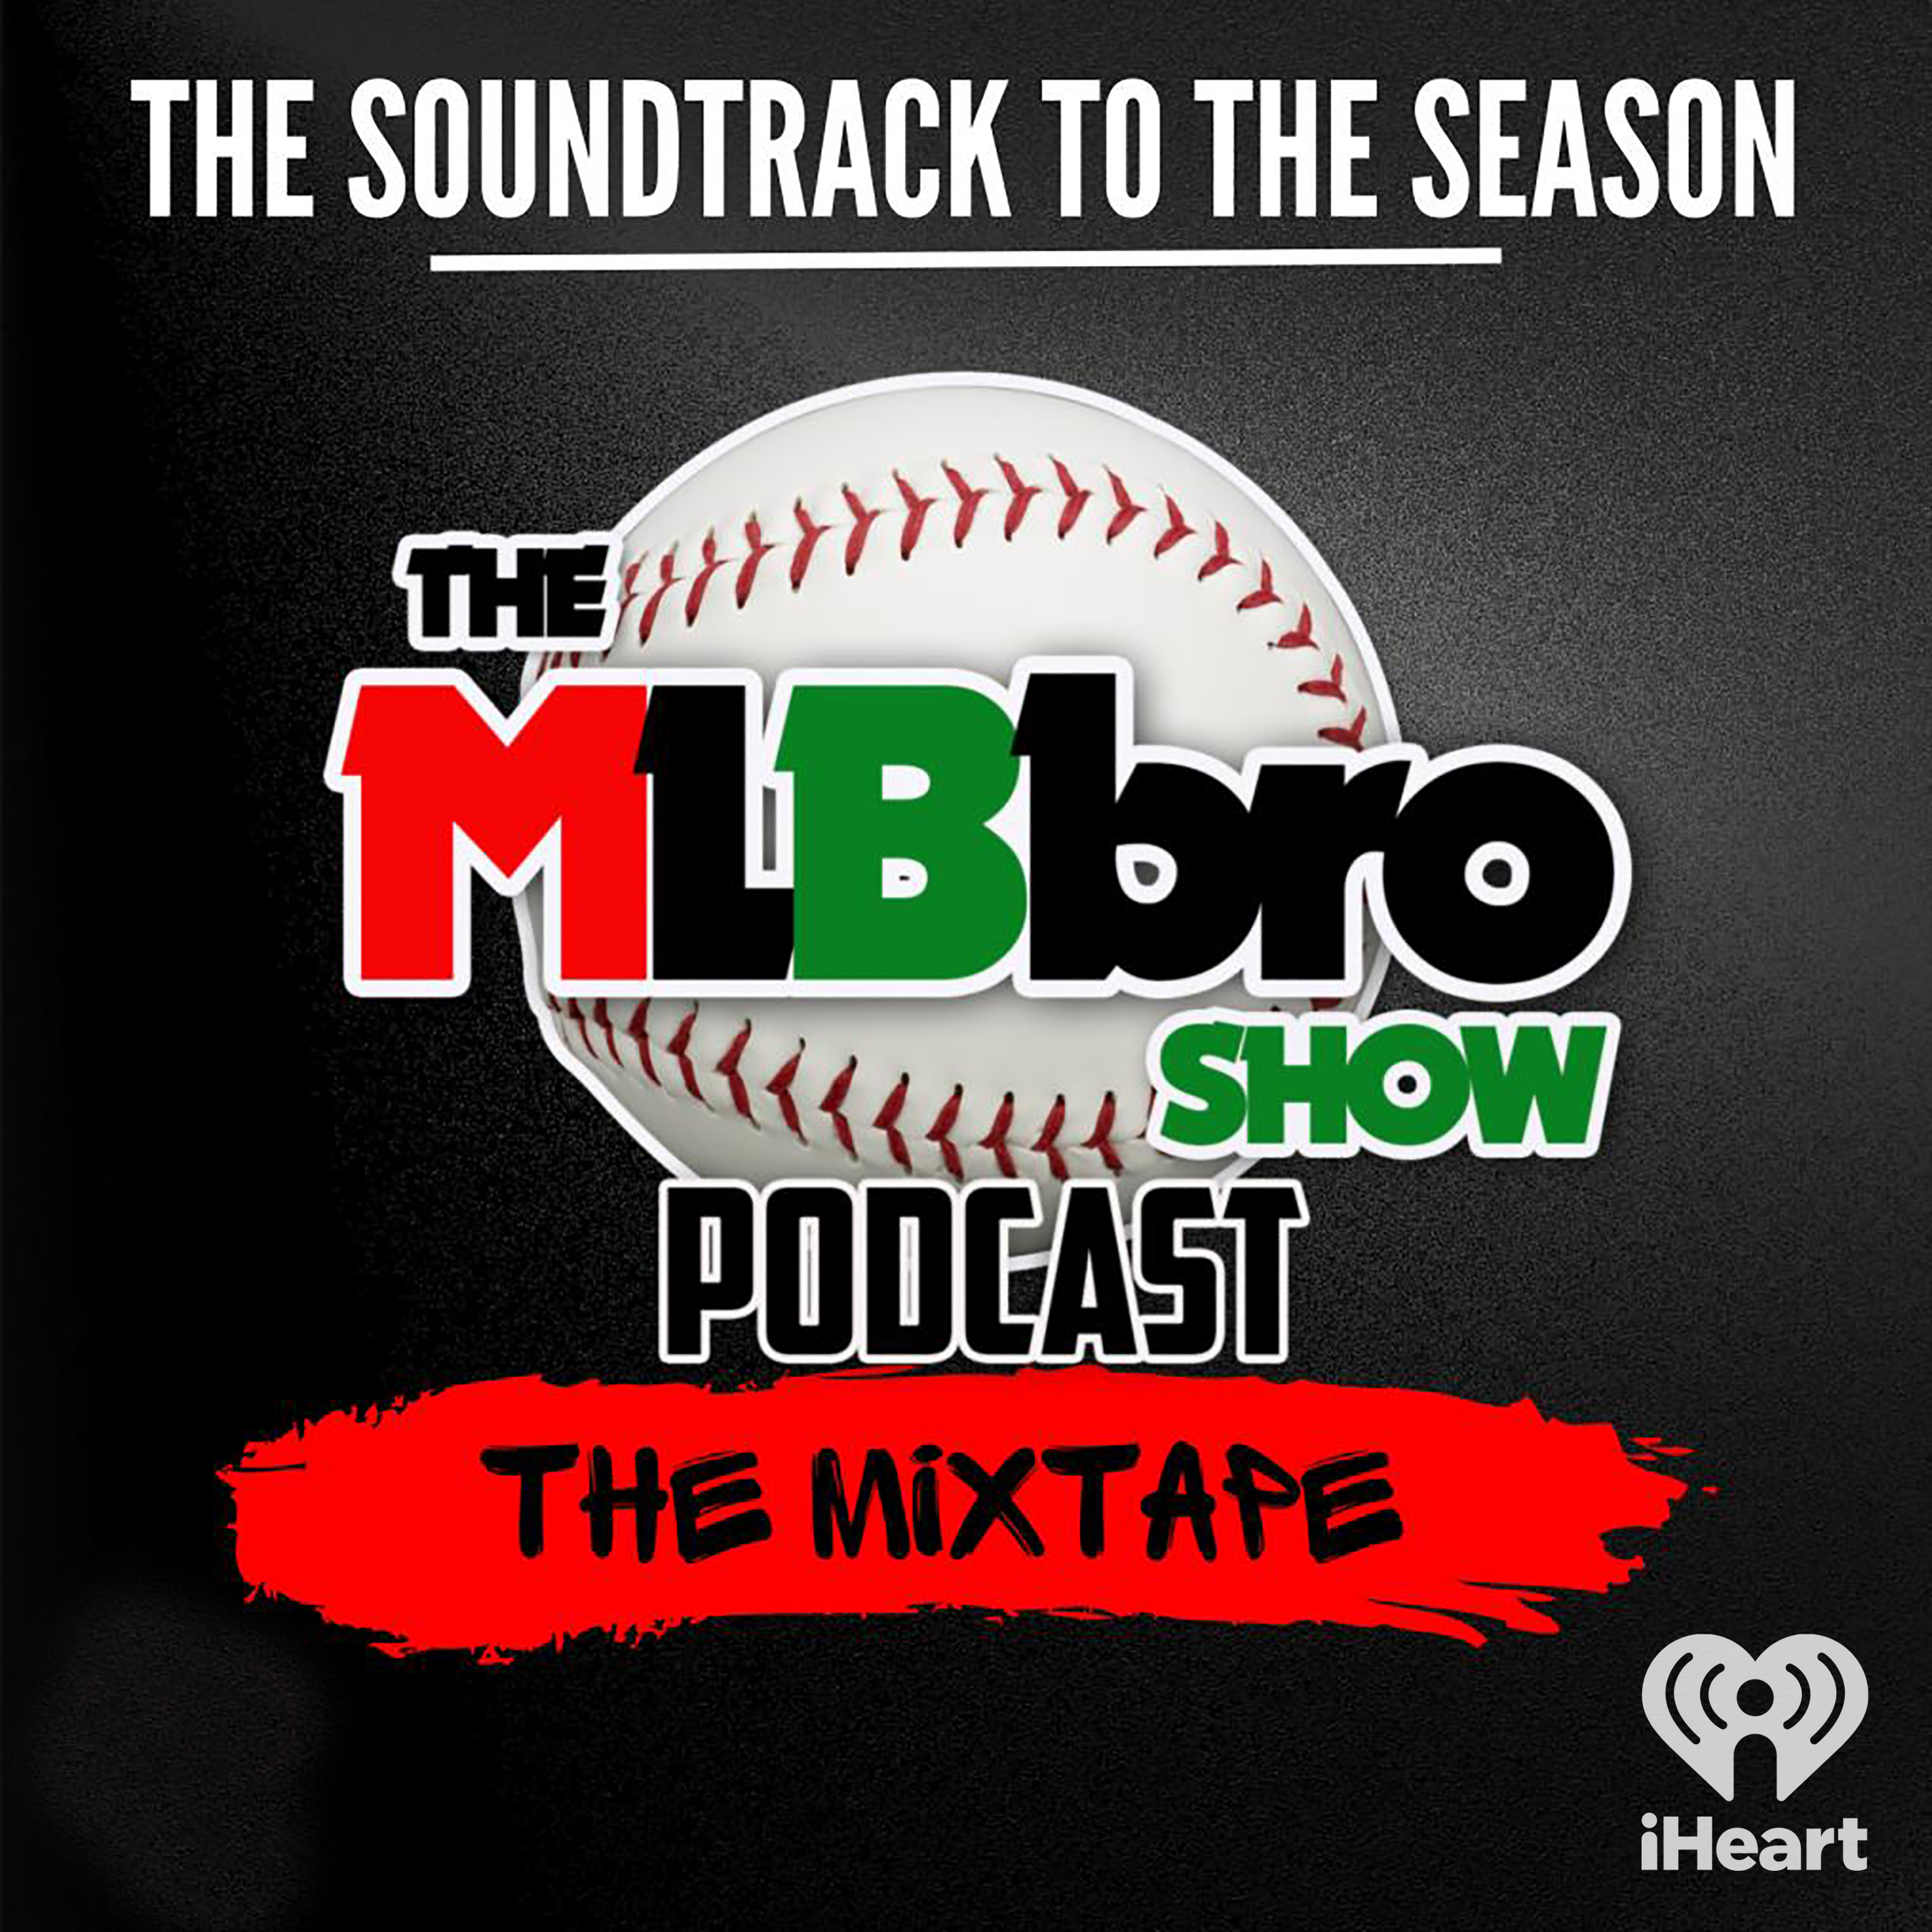 MLBbro Show Podcast The Mixtape Vol 3 Episode 6